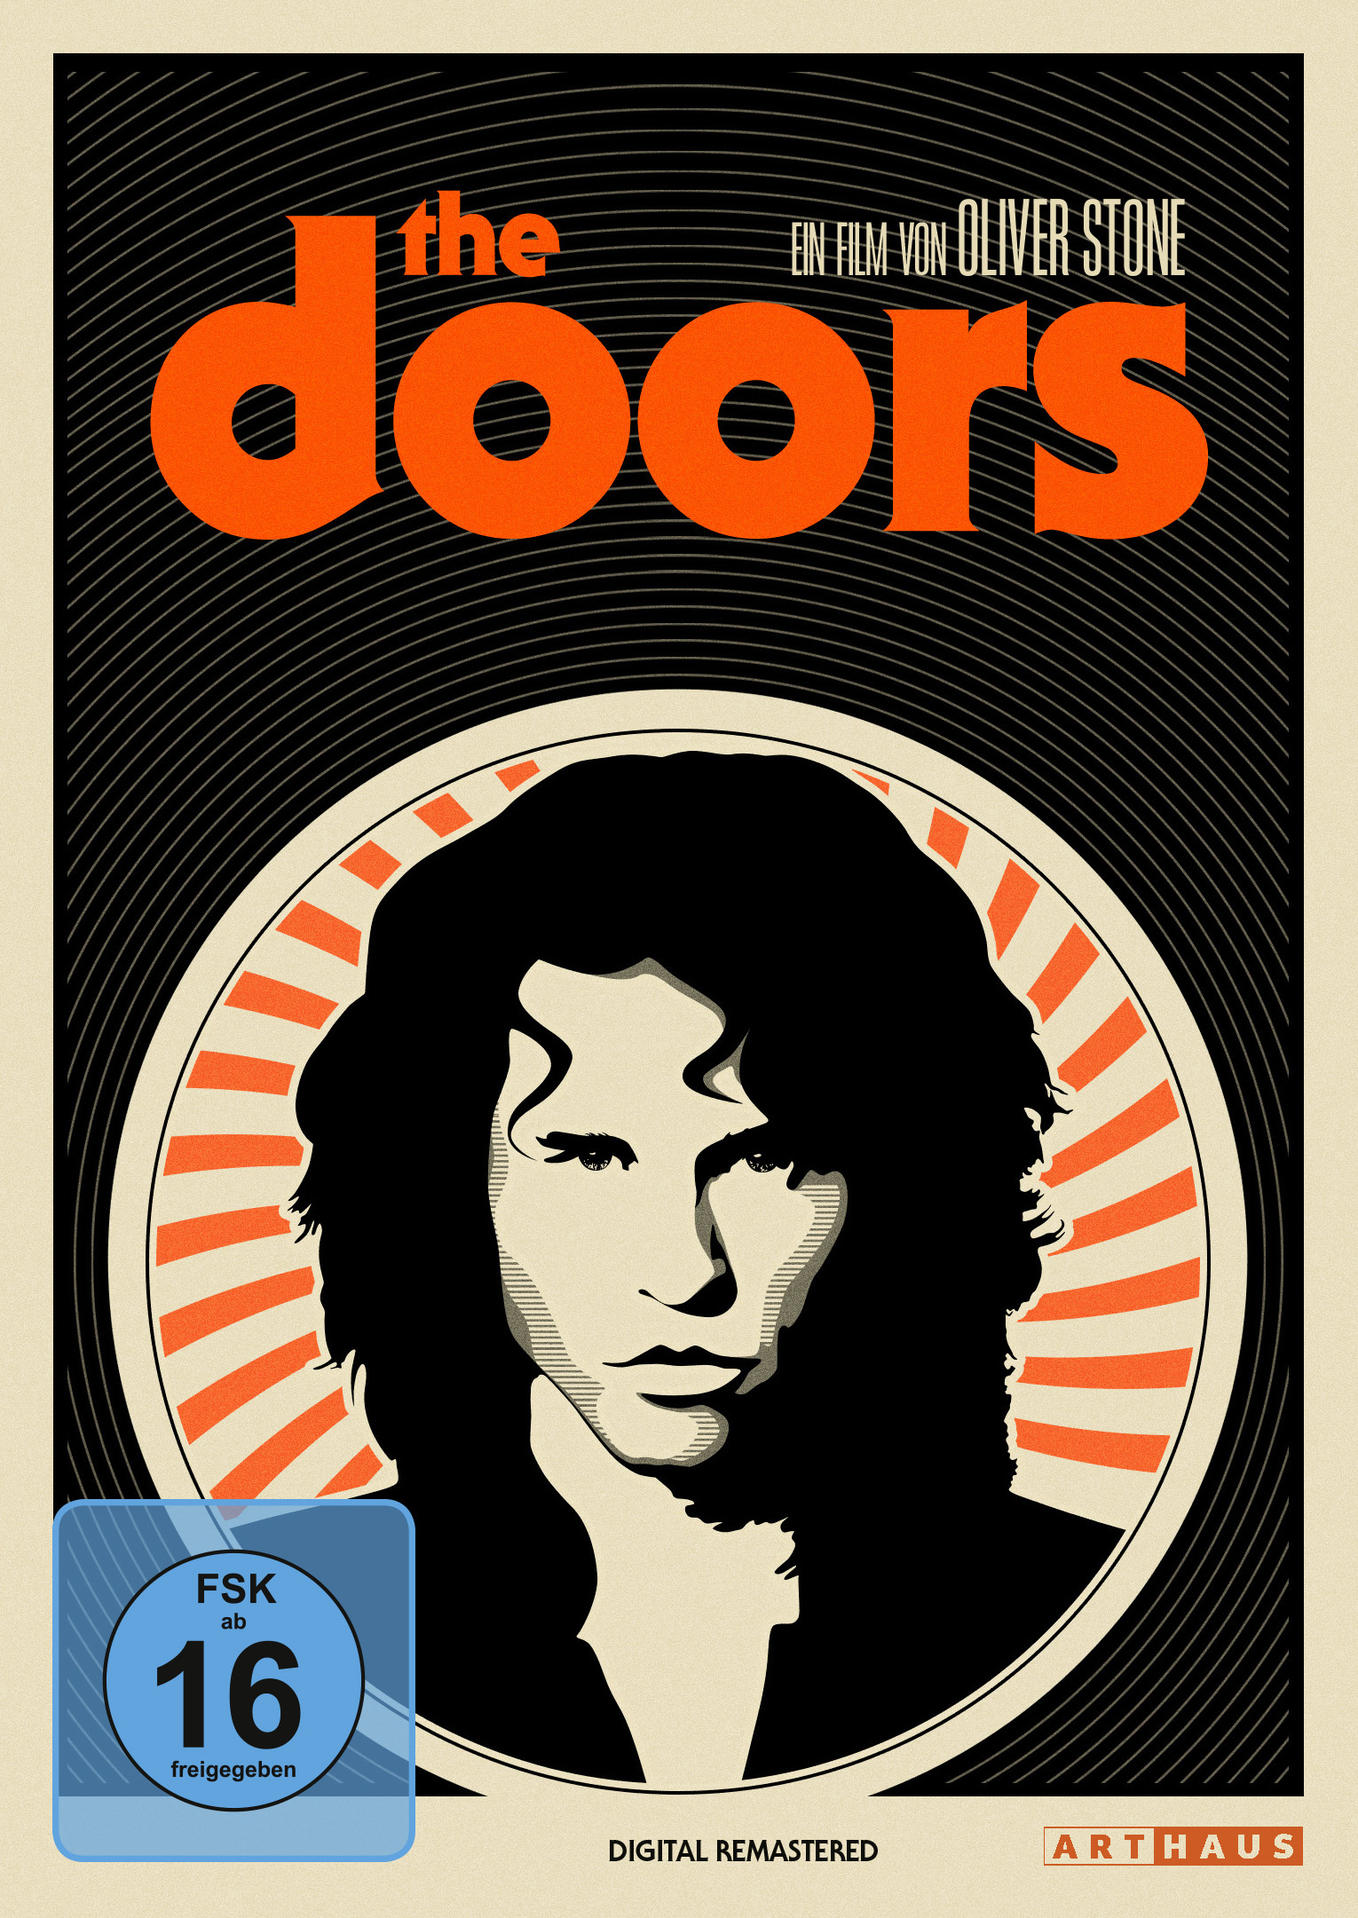 Doors (Digital Remastered) The DVD